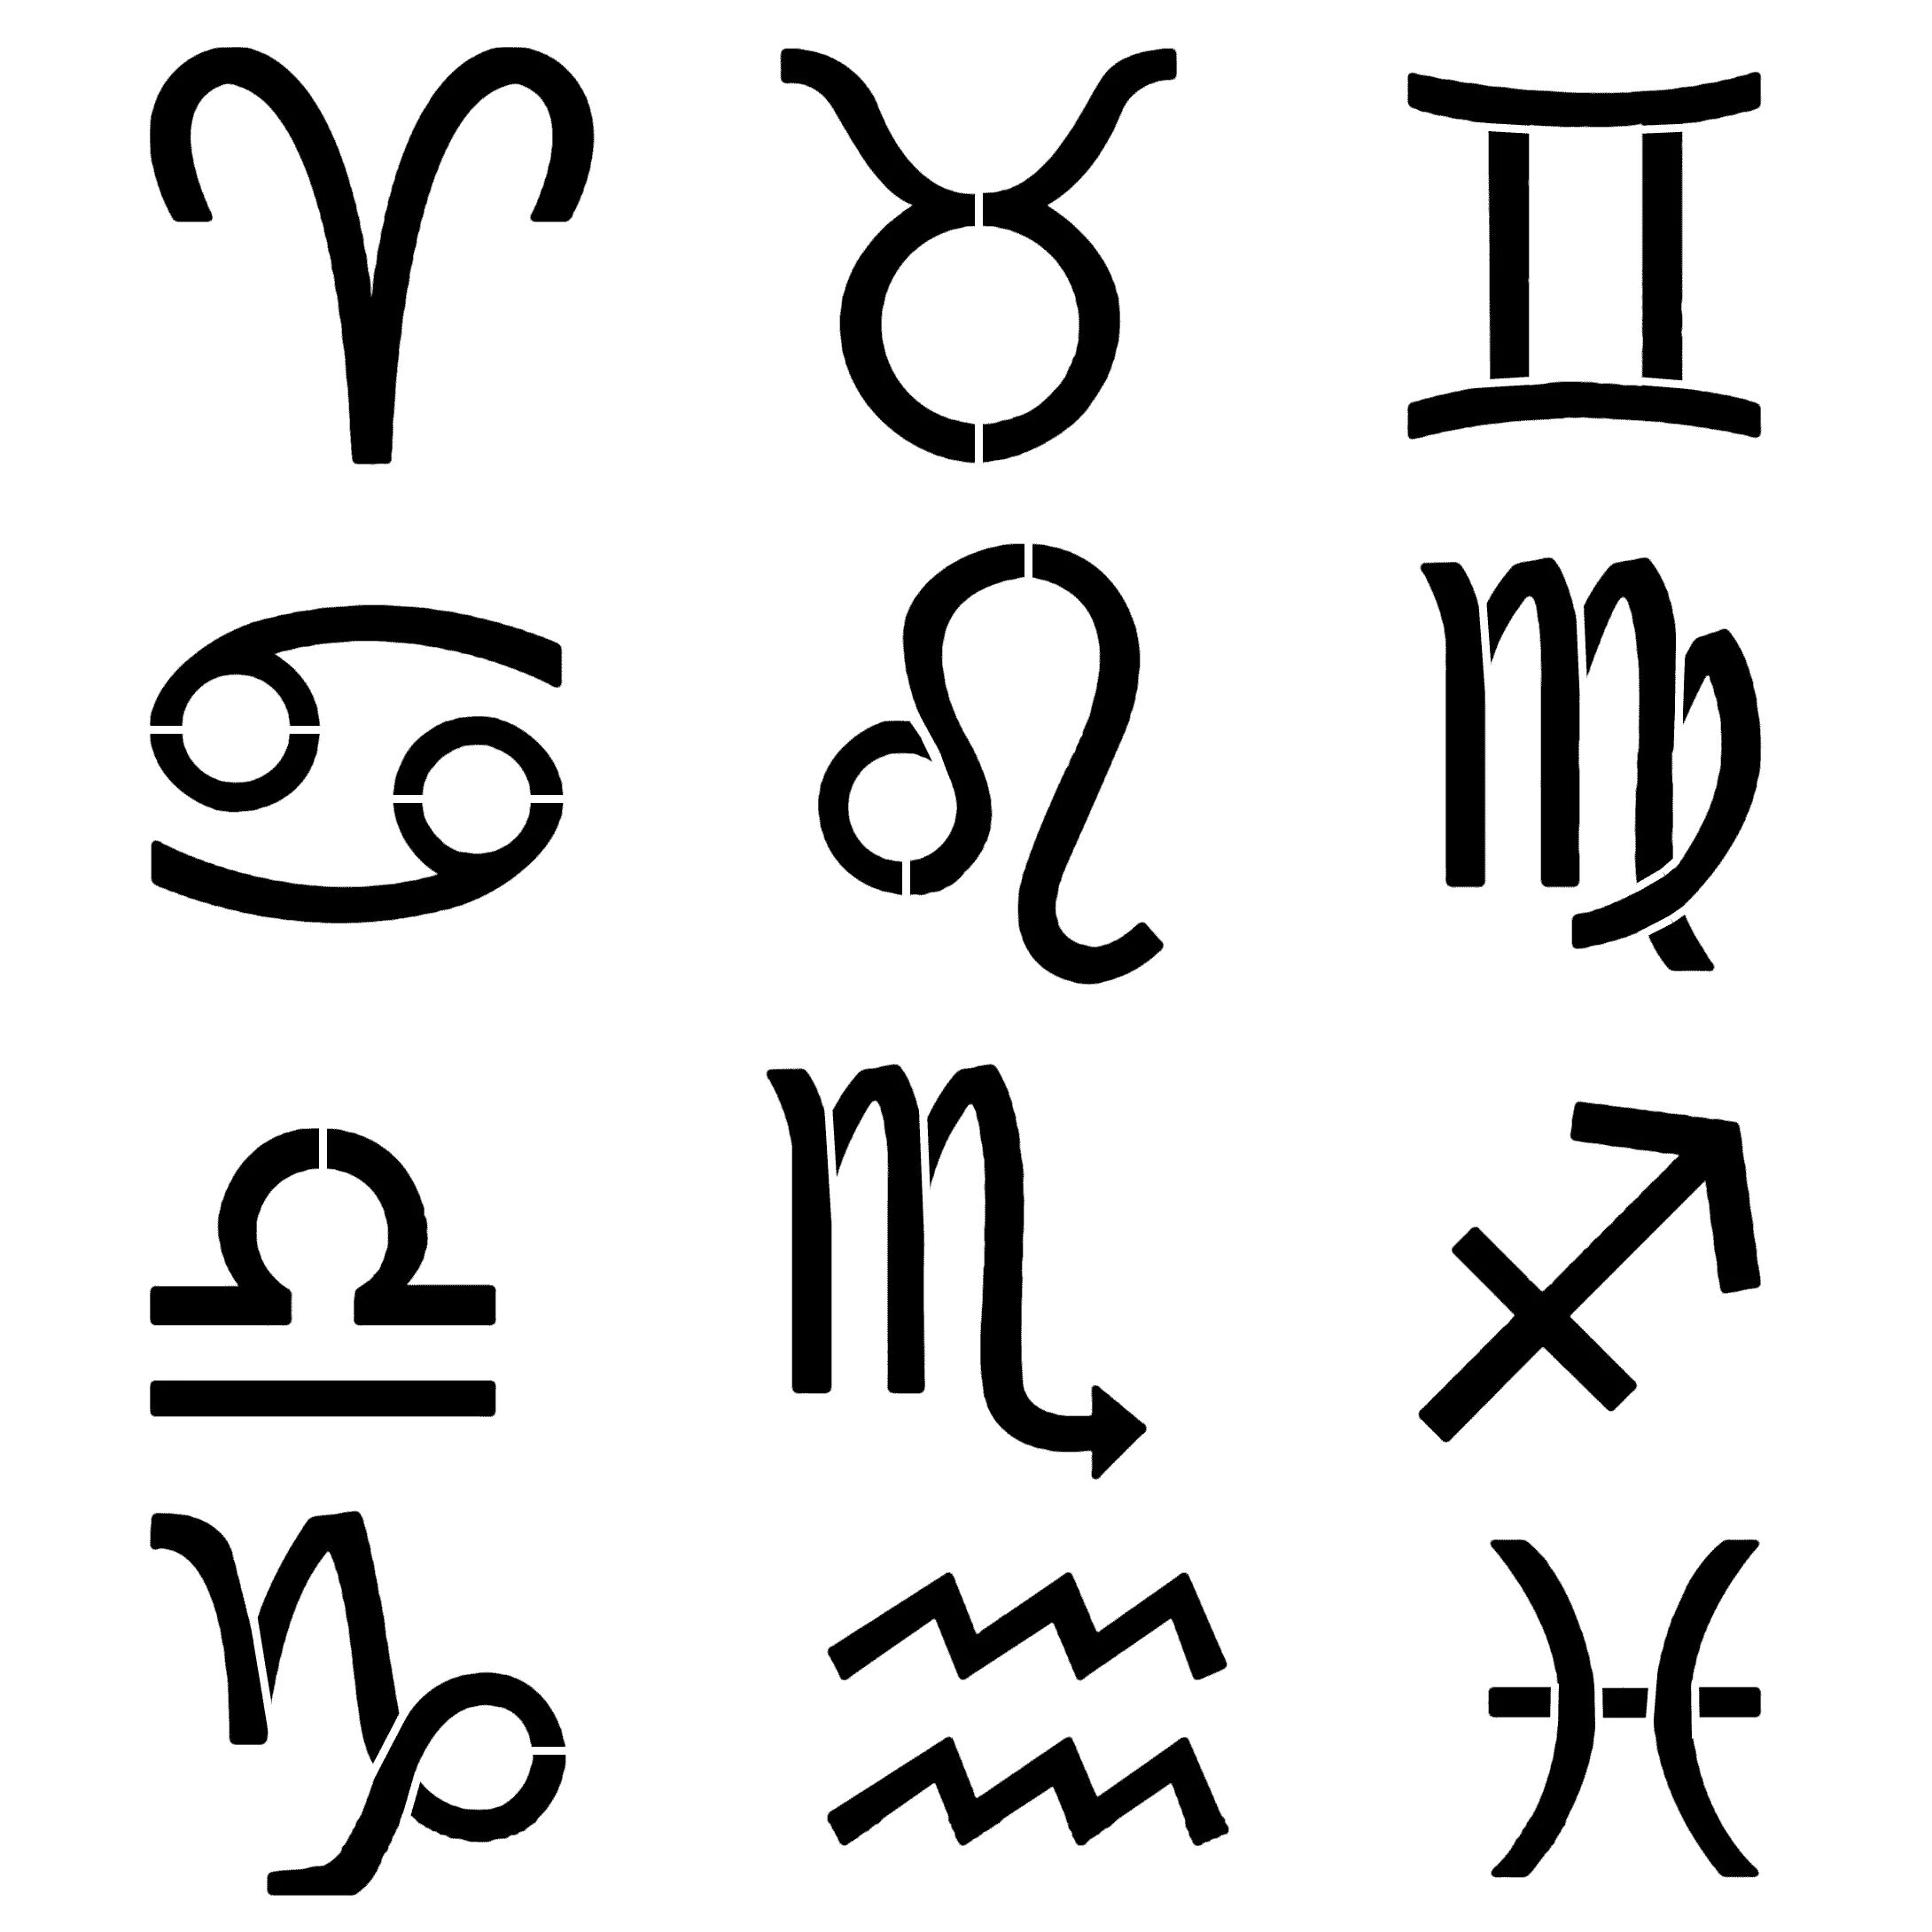 Графический знак символ. Знаки зодиака. Символы. Символы зодиака. Красивые символы знаков зодиака.